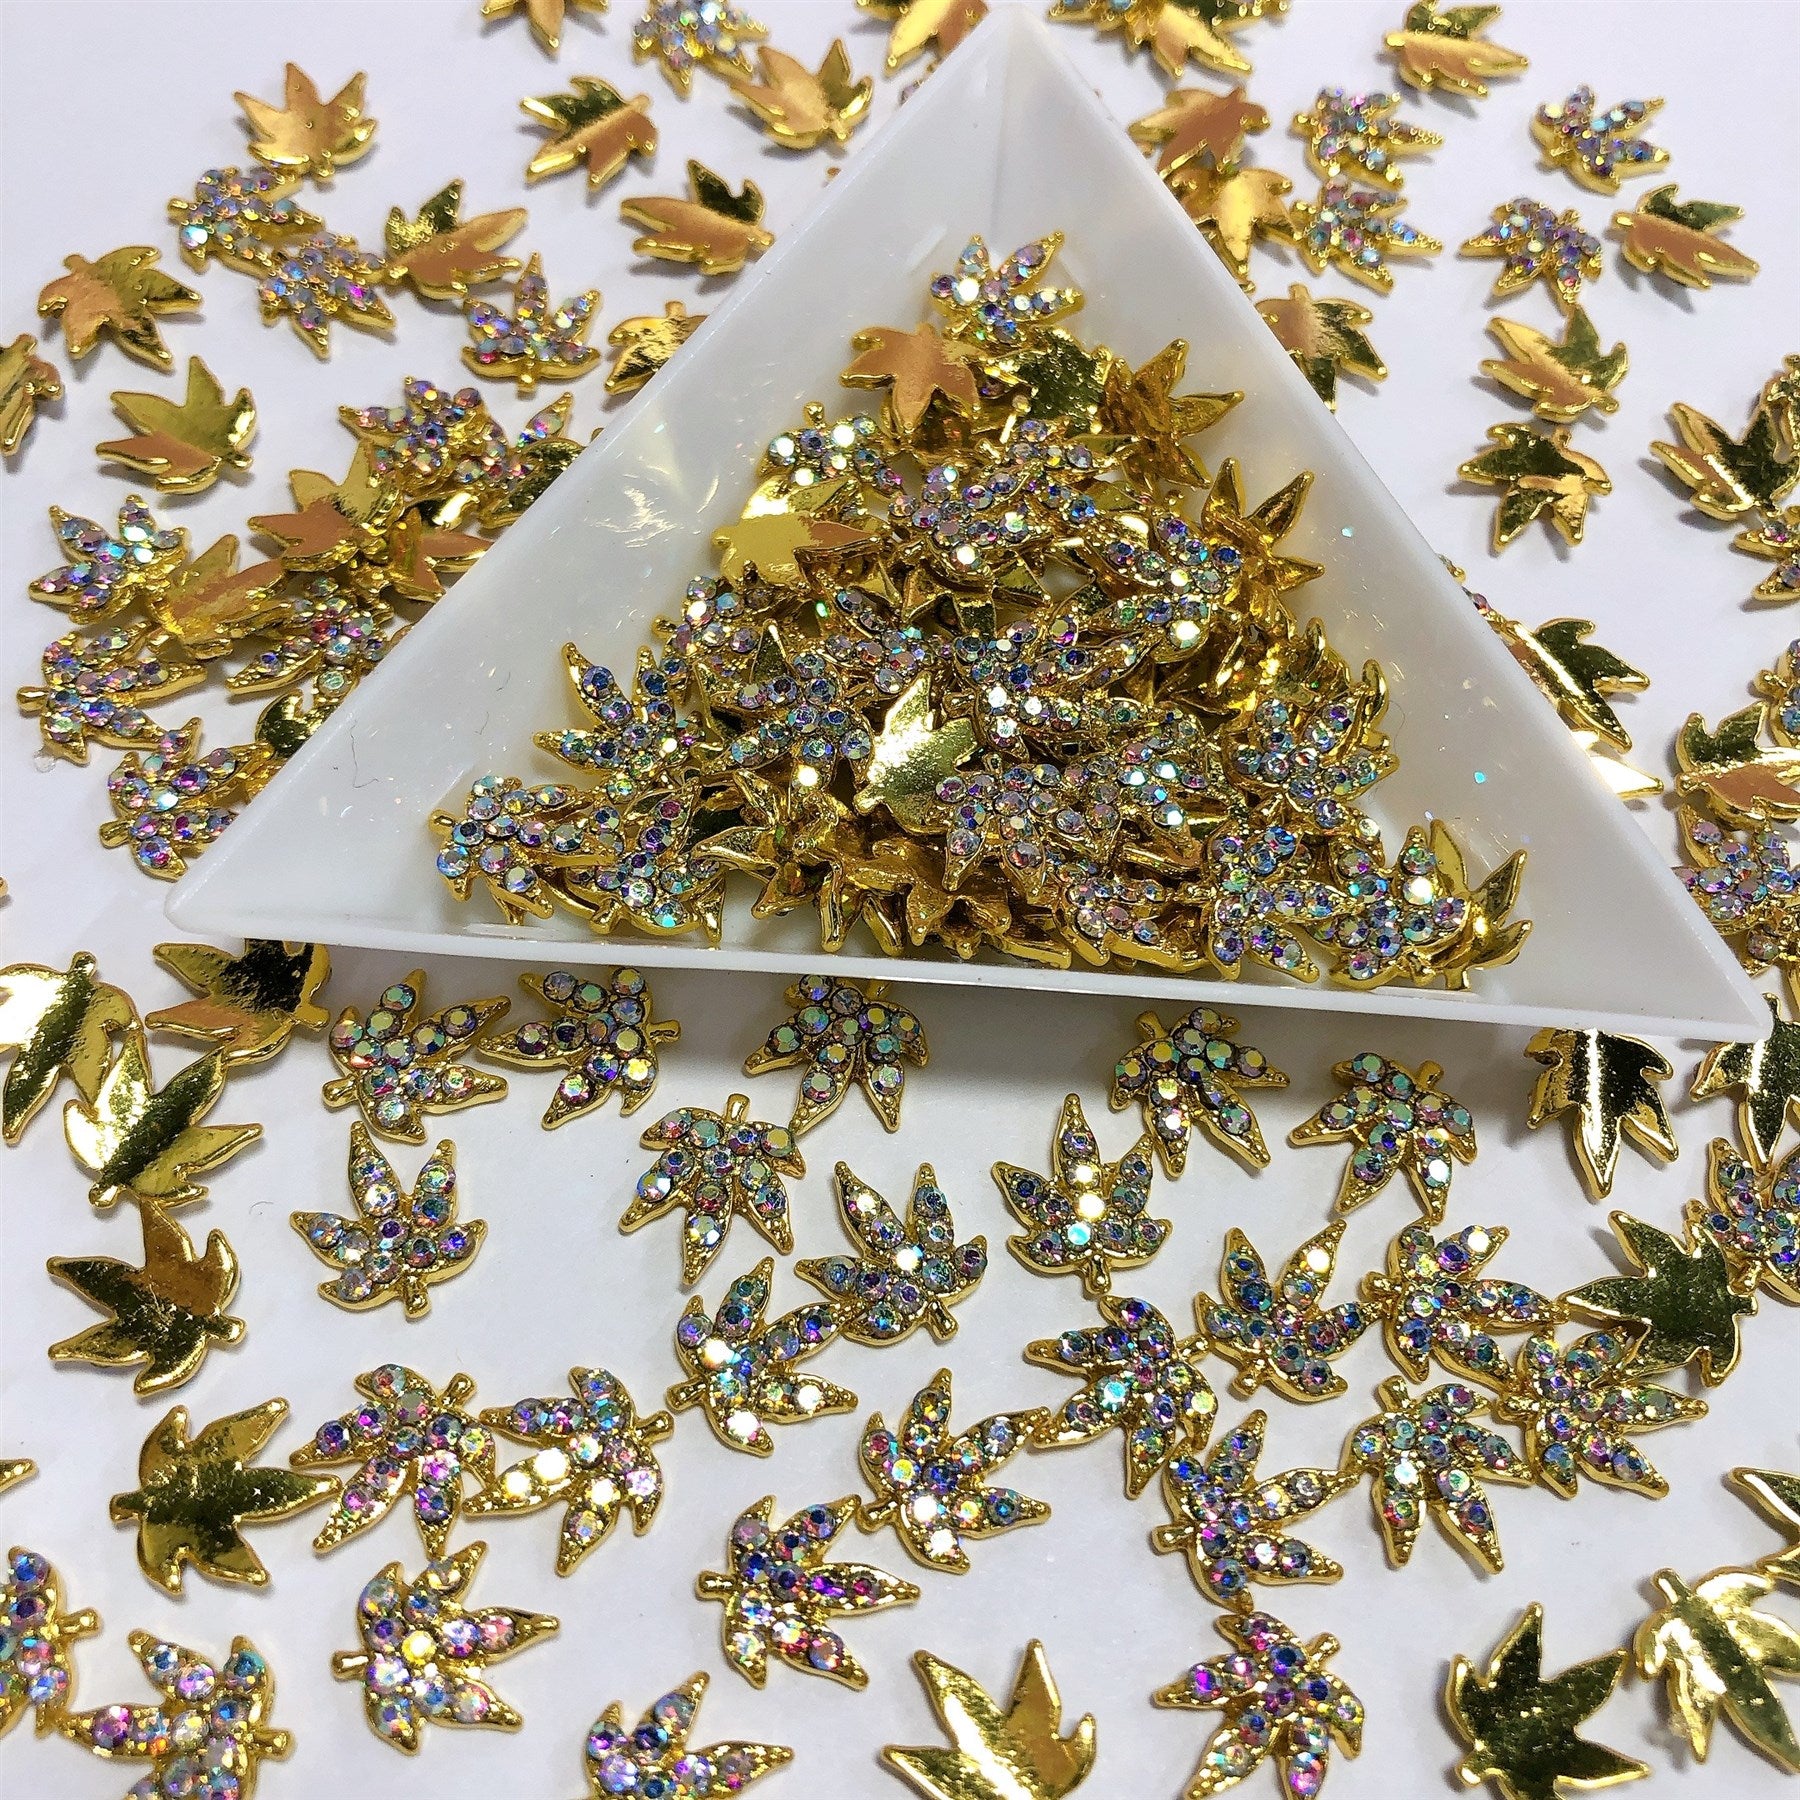 3D Crystals Gold Charm Leaf Shape Nail Art Decorations, Rhinestone Charms